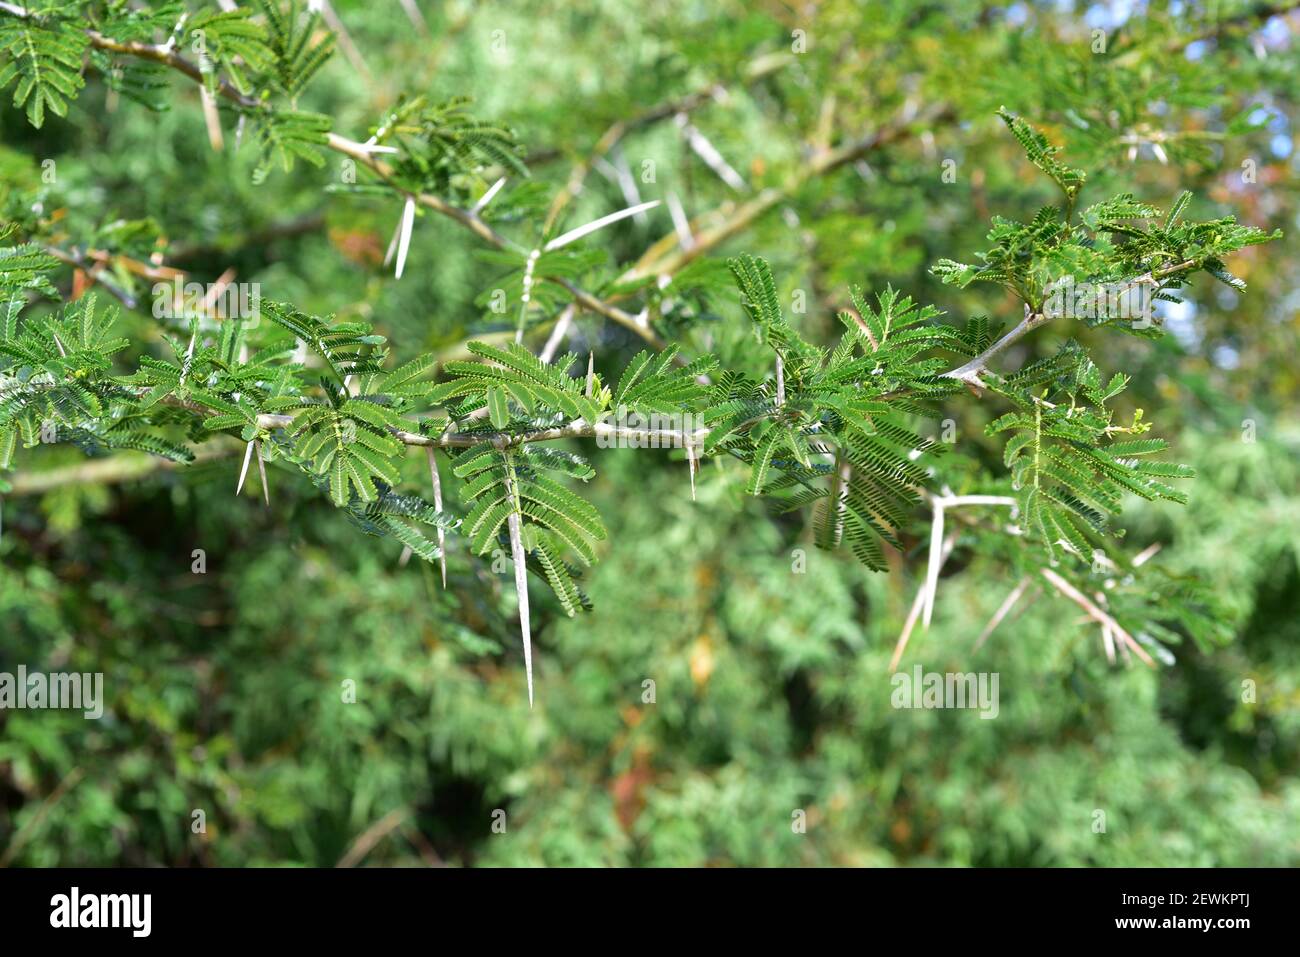 Sweet thorn or karoo thorn (Vachellia karroo, Acacia karroo or Acacia natalitia) is a spiny shrub or small tree native to southern Africa. Spines and Stock Photo